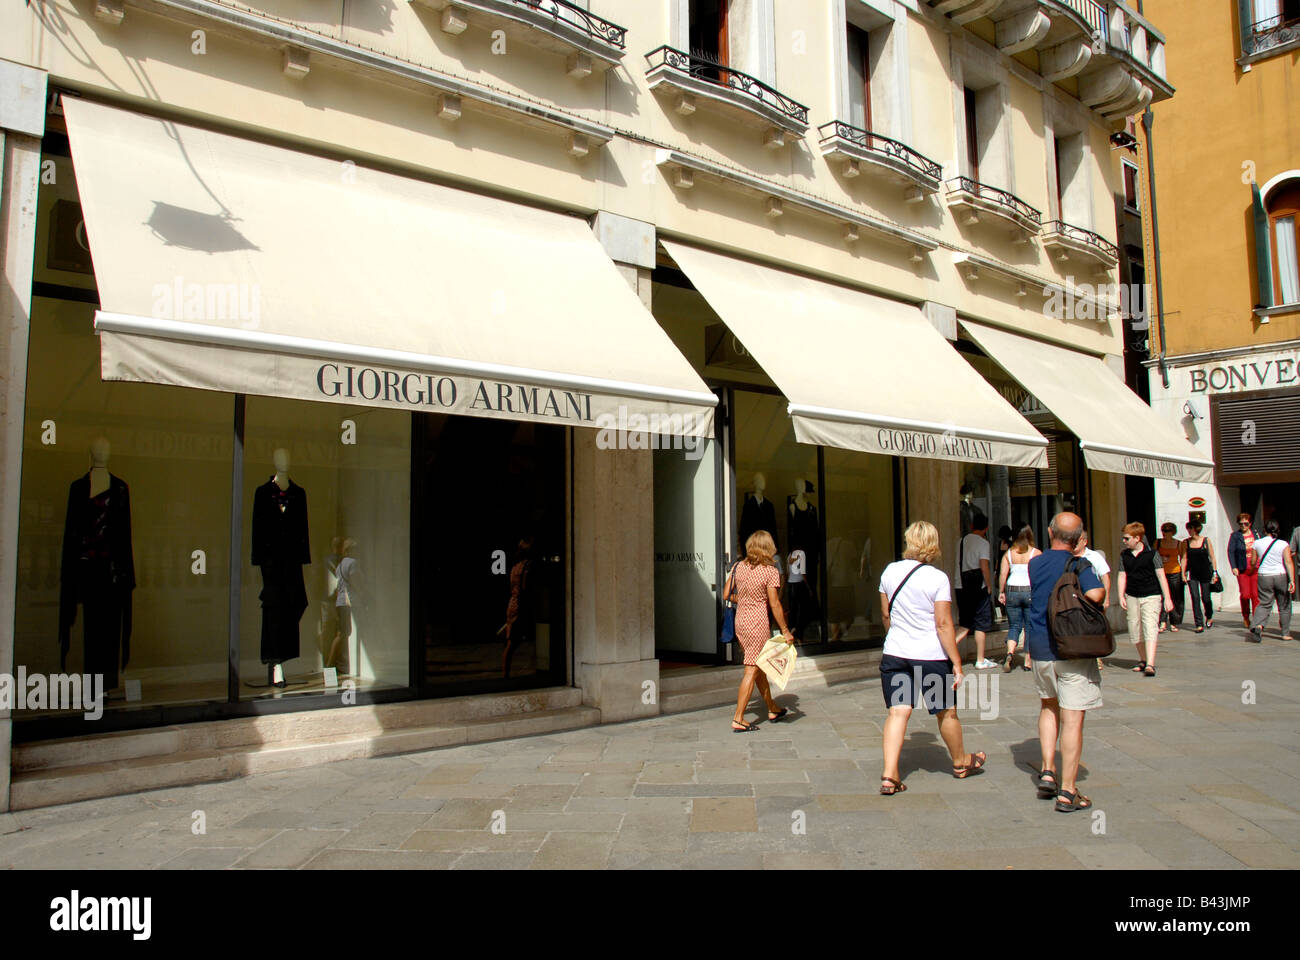 Giorgio Armani shop Venice Italy Stock Photo - Alamy